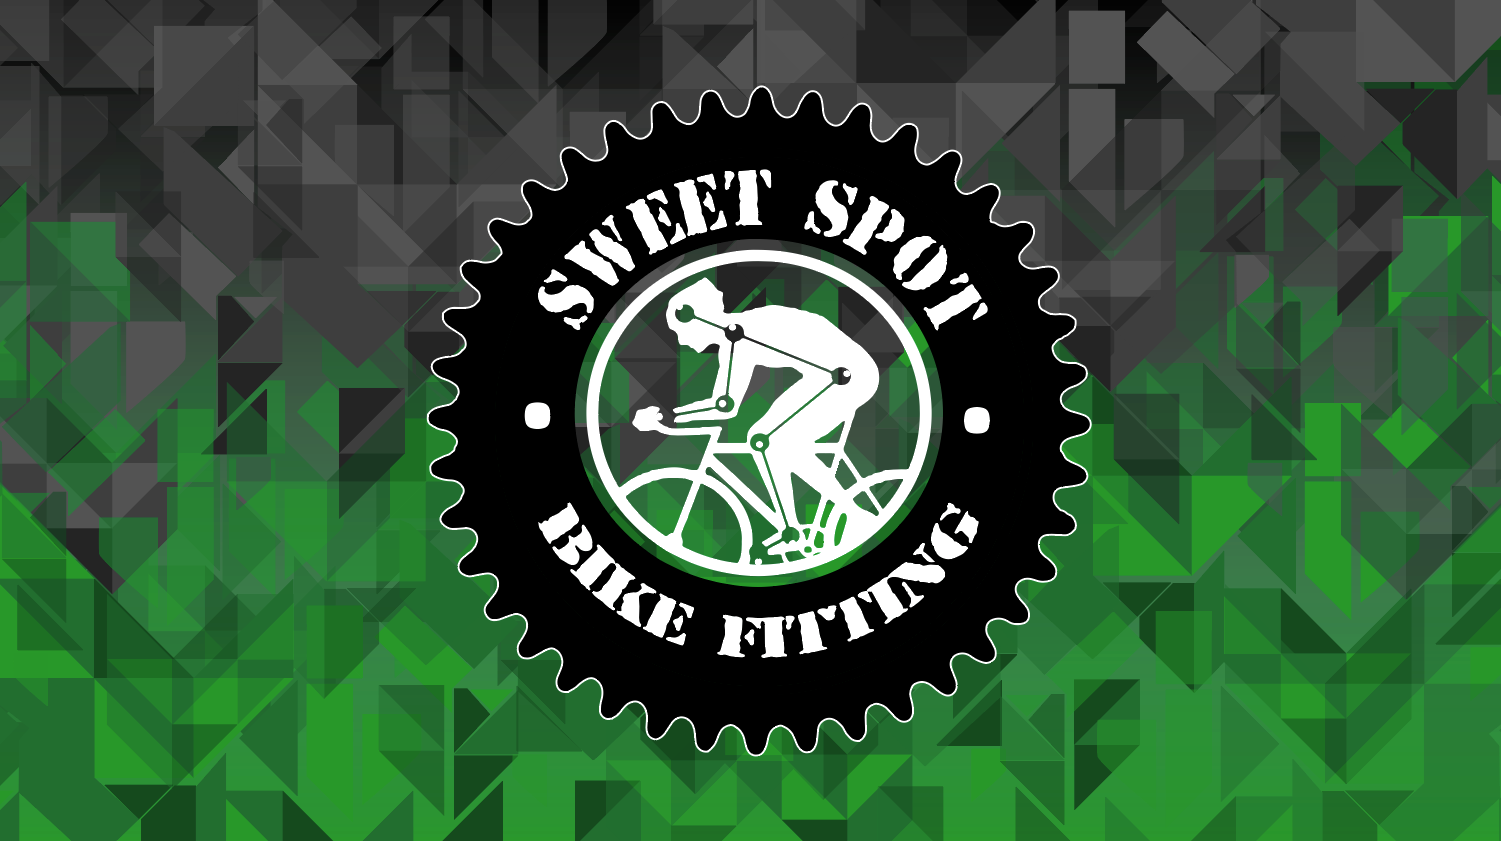 Sweet Spot Bike Fitting